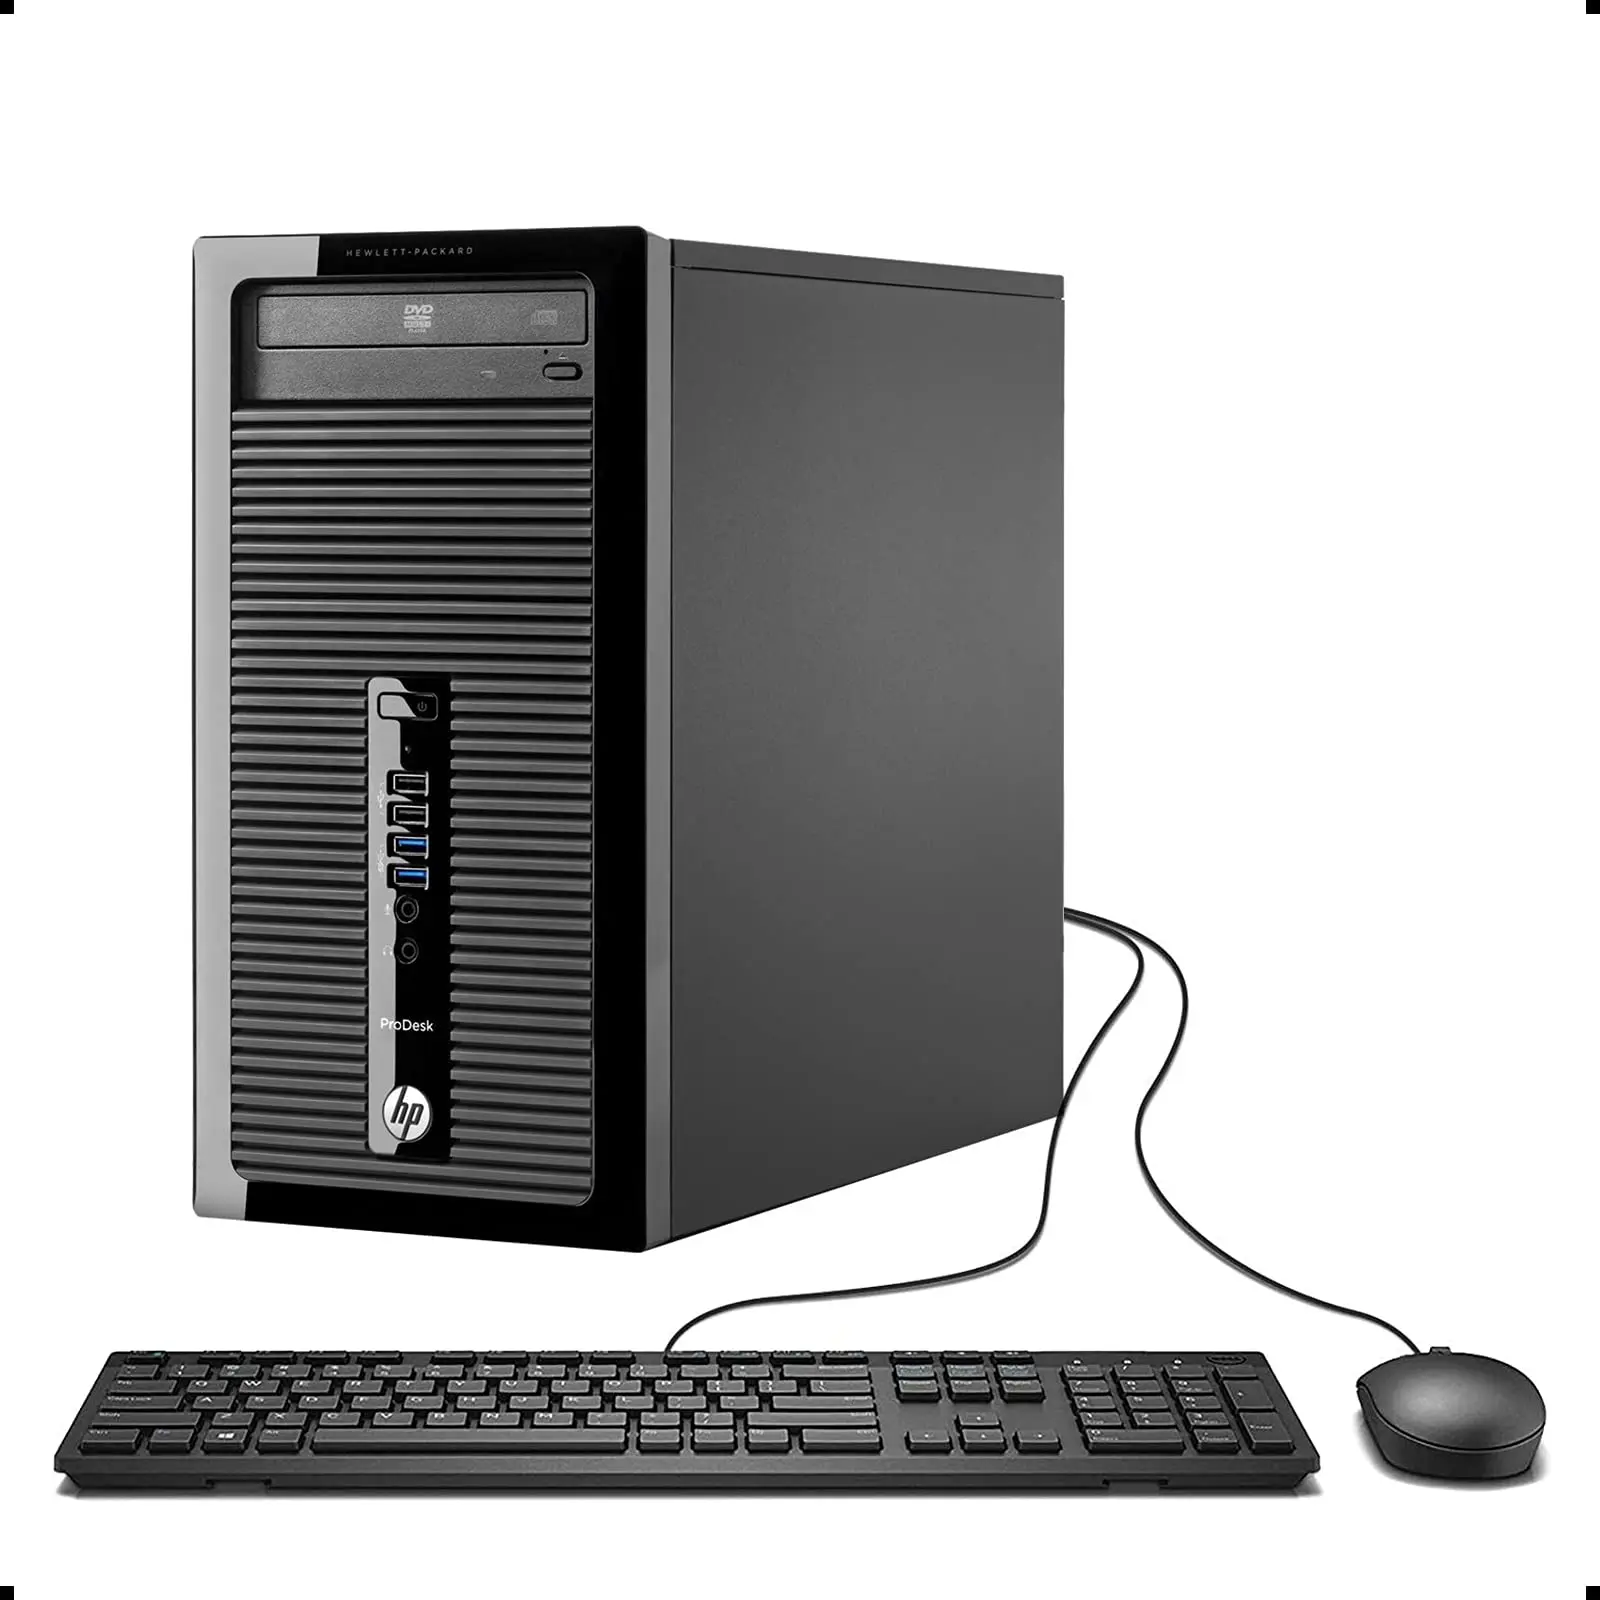 hewlett packard desktop computers - Which is the best desktop computer